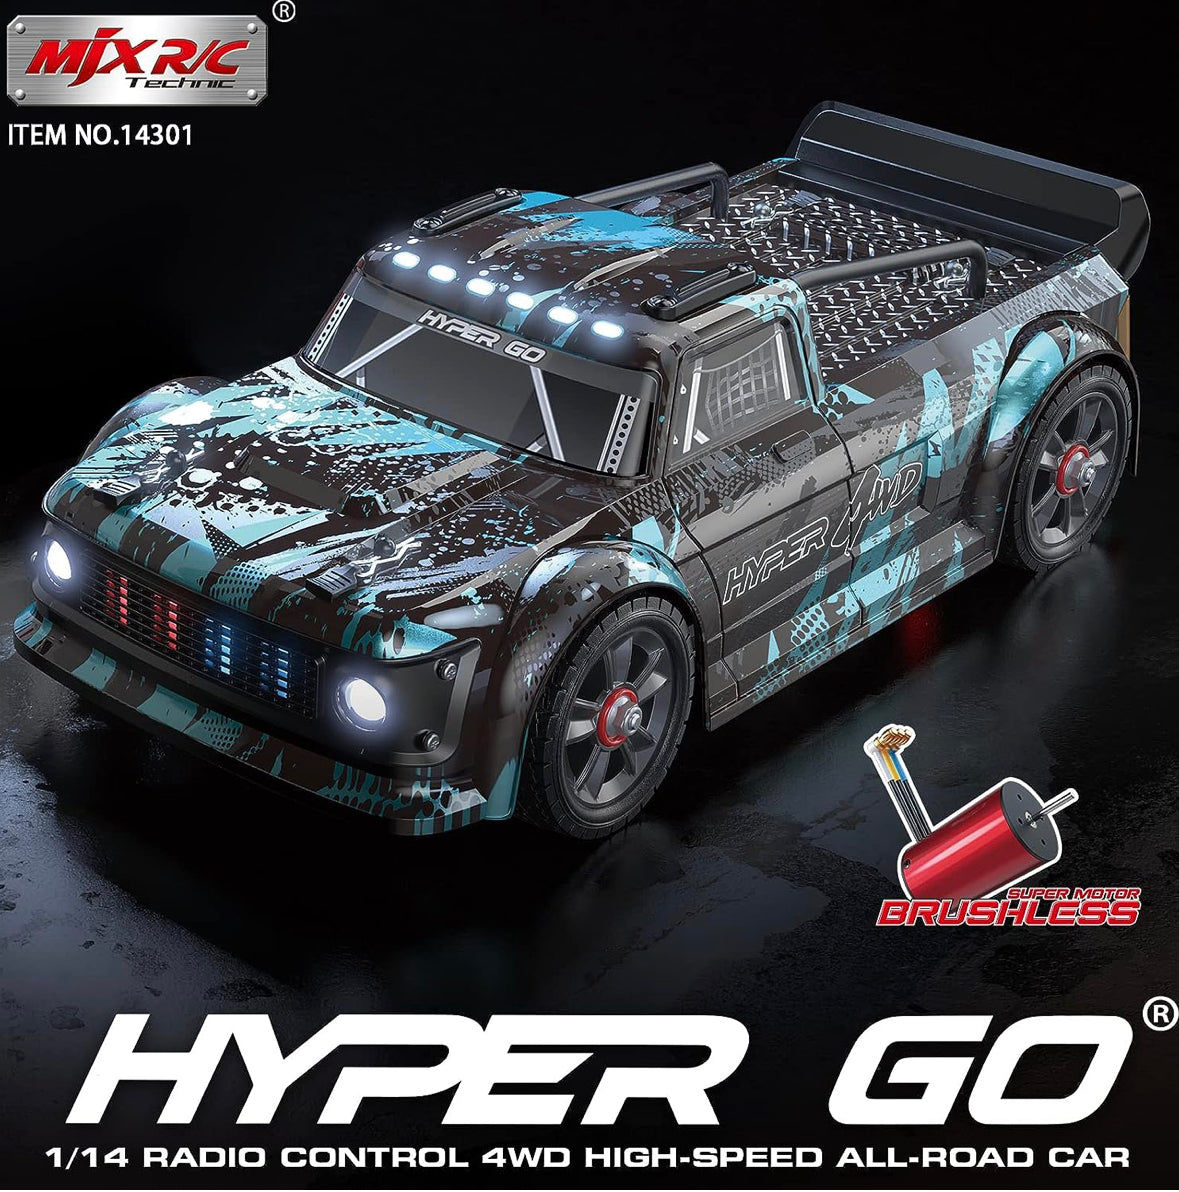 MJX 1/14 HYPER GO 4WD BRUSHLESS 2S RC CAR [14301]